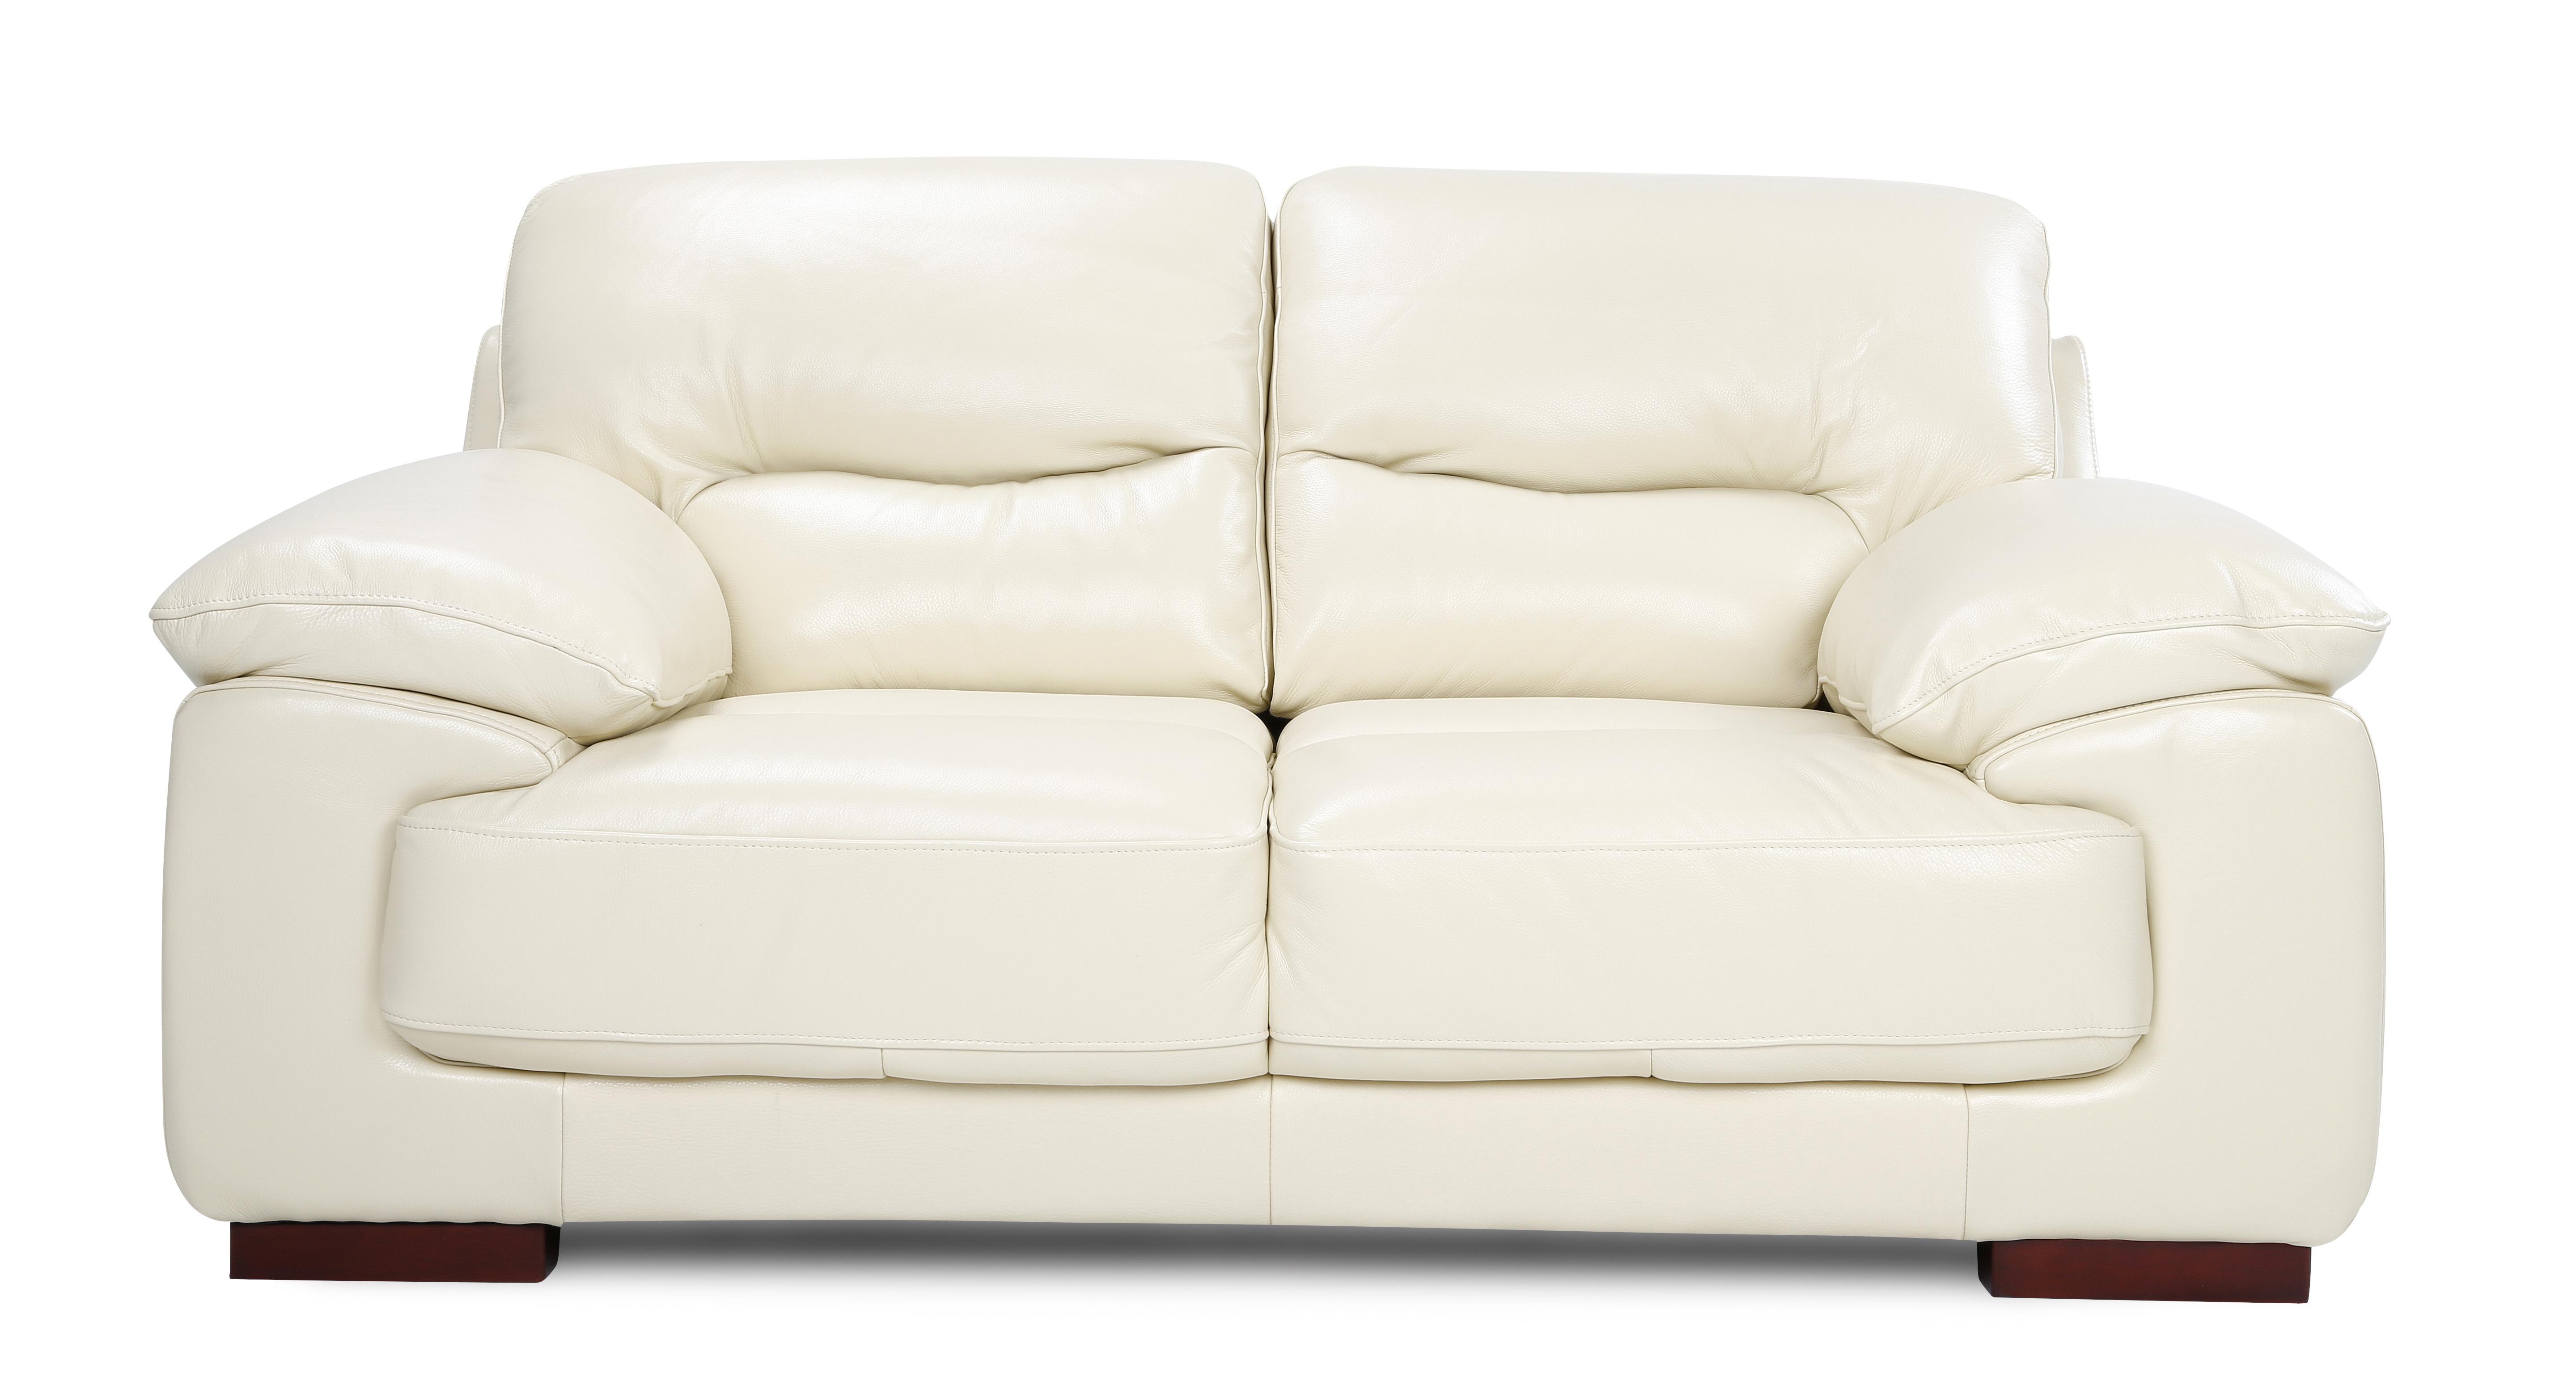 dfs cream leather sofa